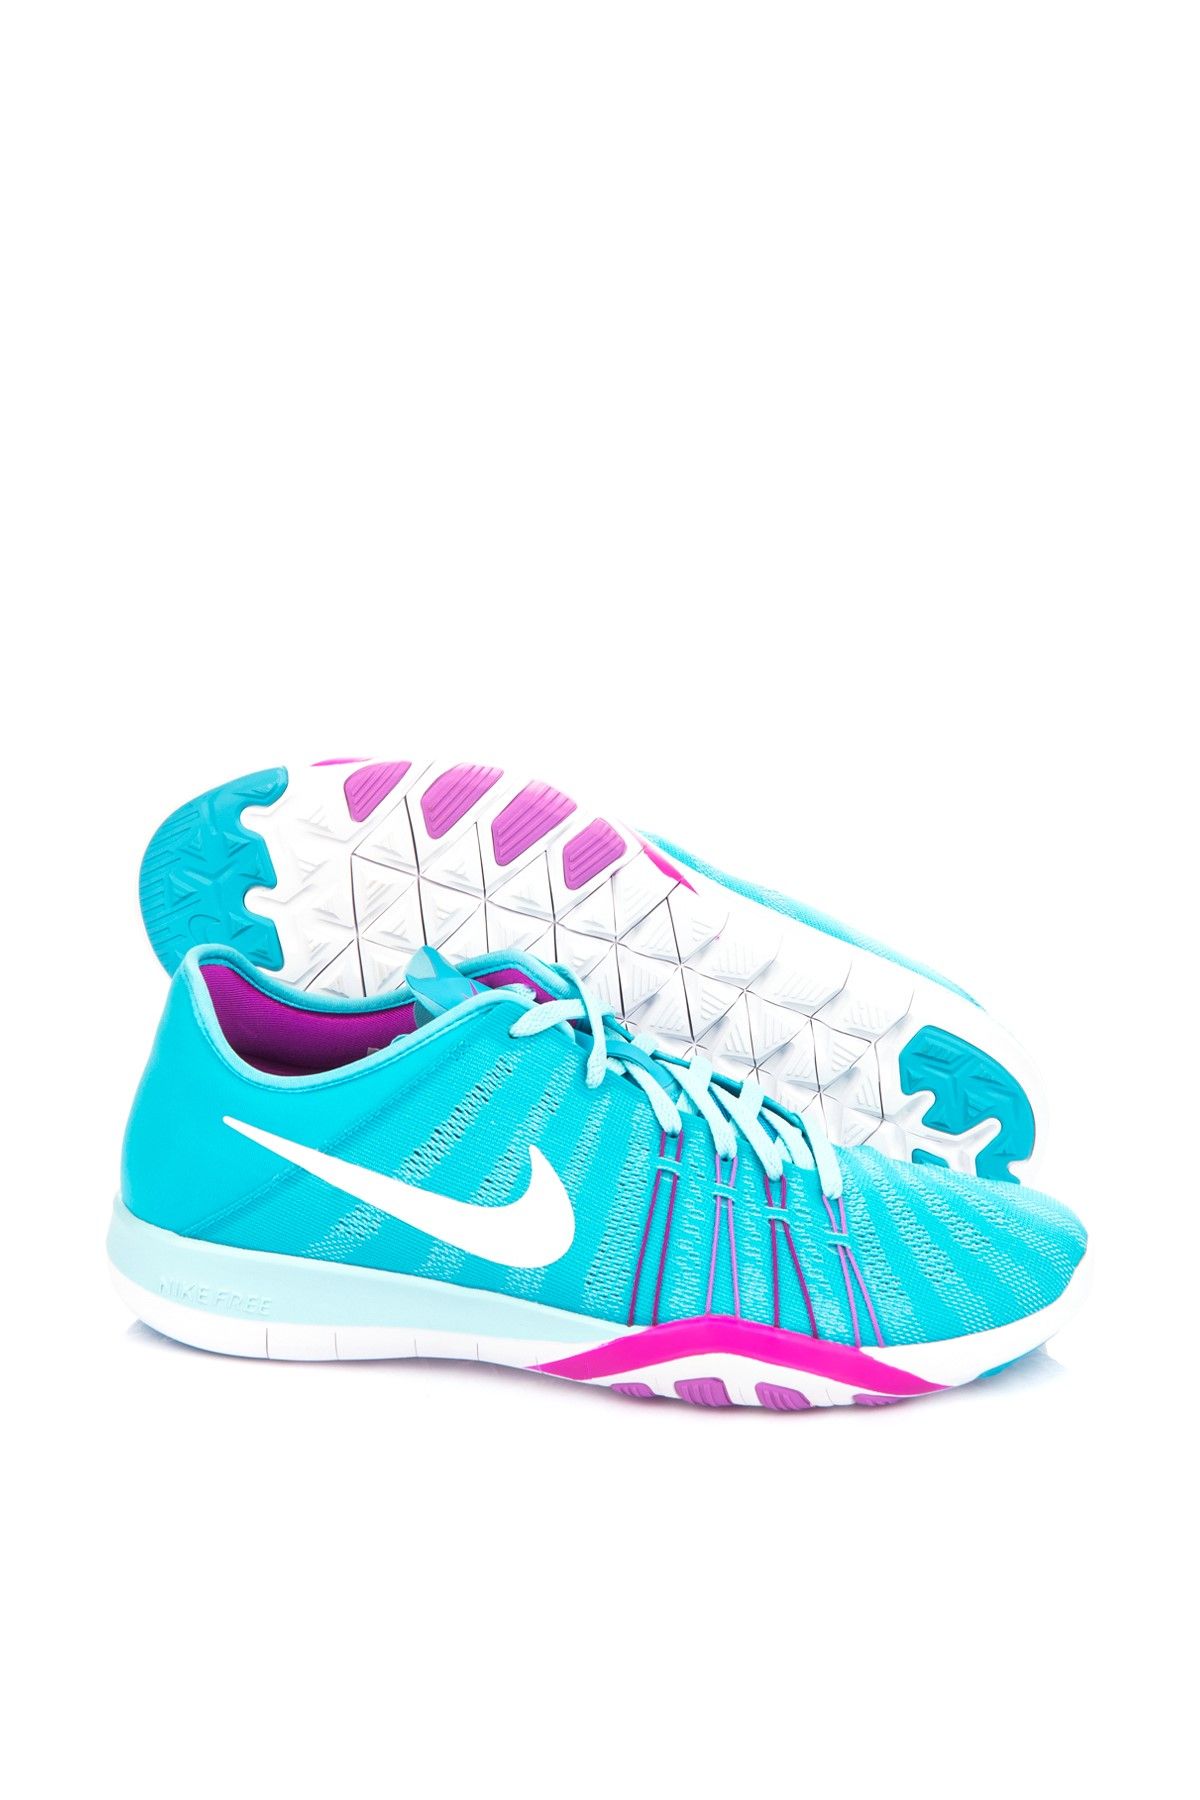 Nike Kadın Sneaker 833413-400 Free Trainer - 833413-400